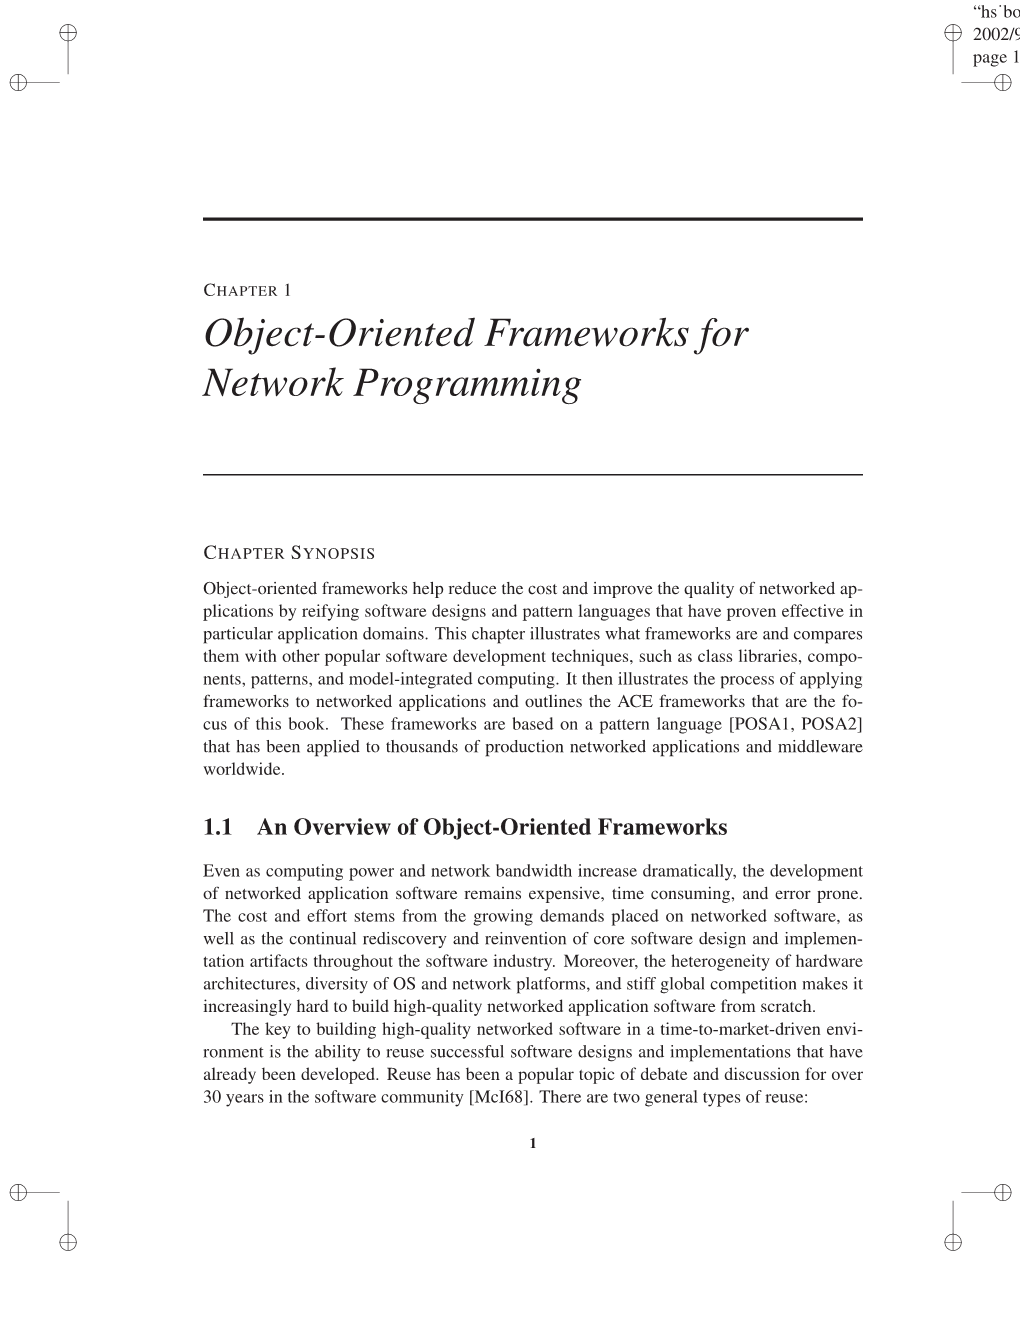 Object-Oriented Frameworks for Network Programming